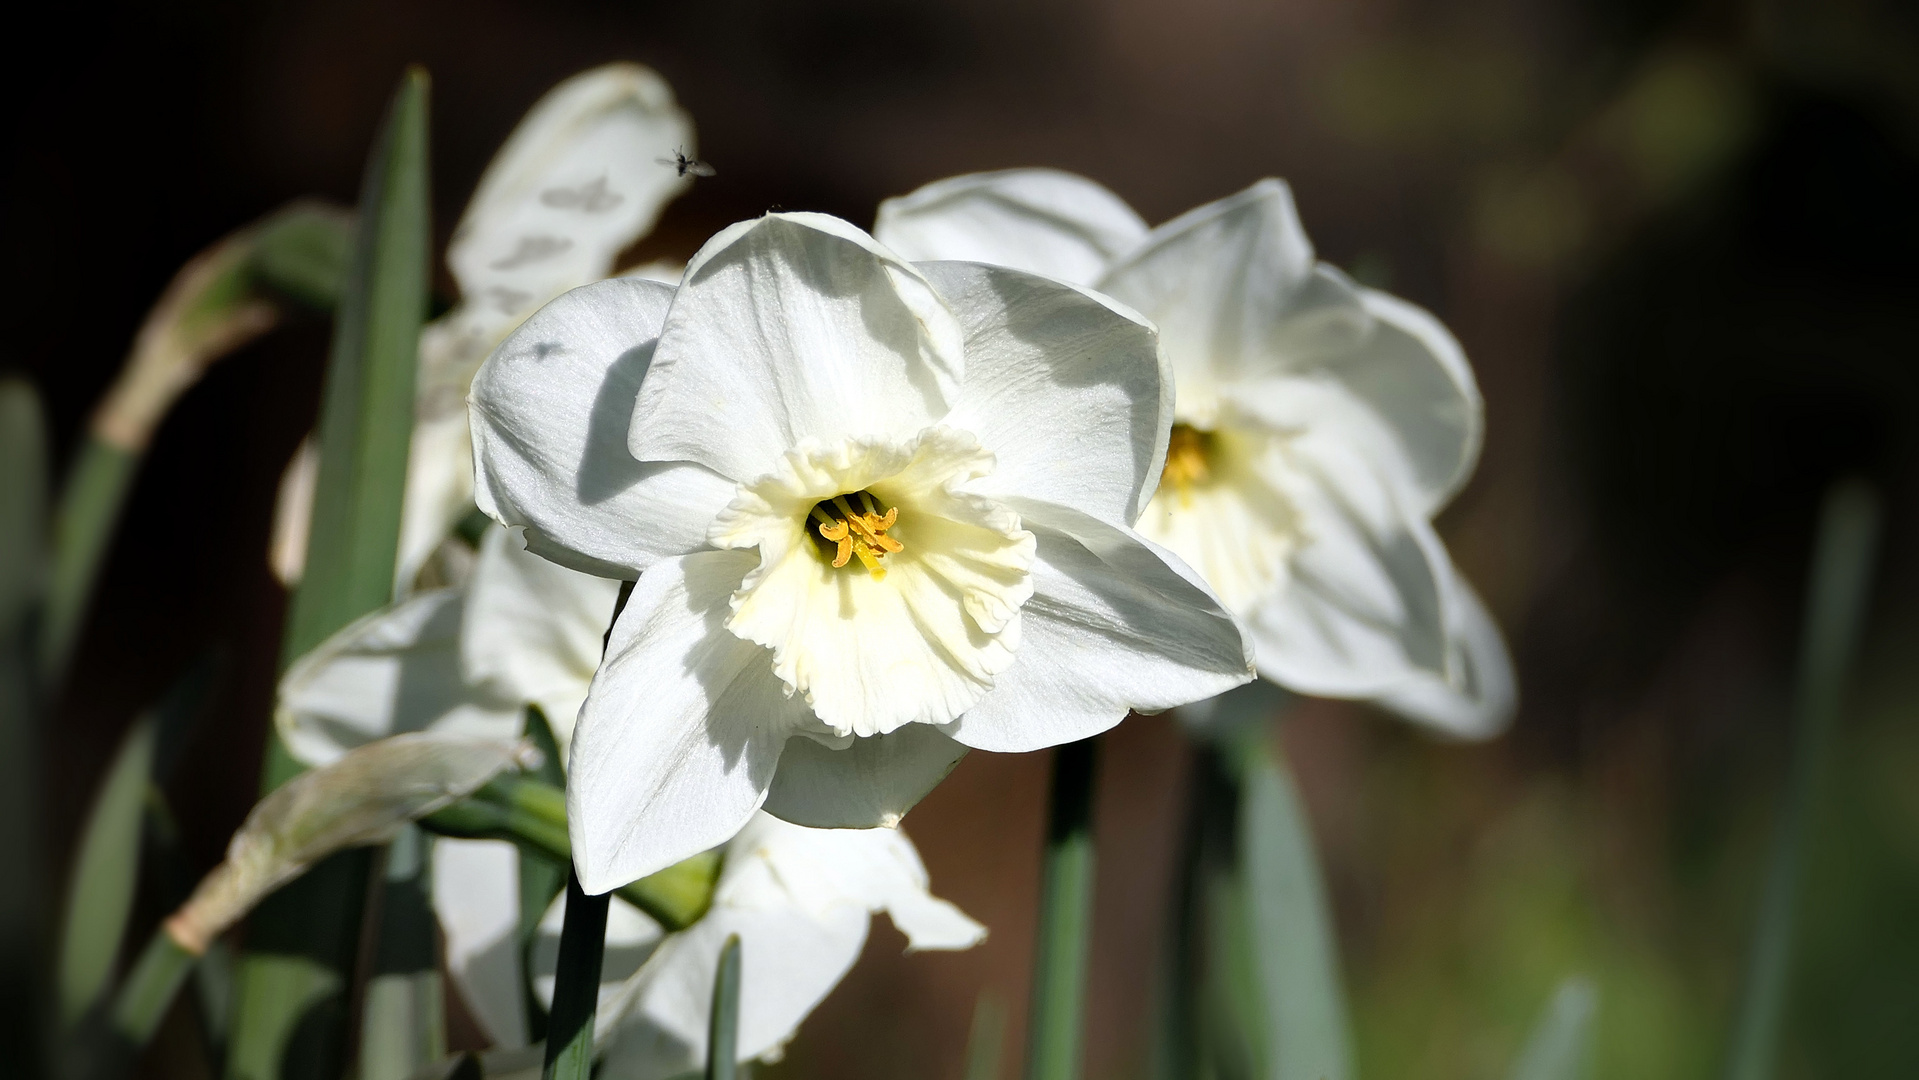 ... daffodil "Mount Hood"